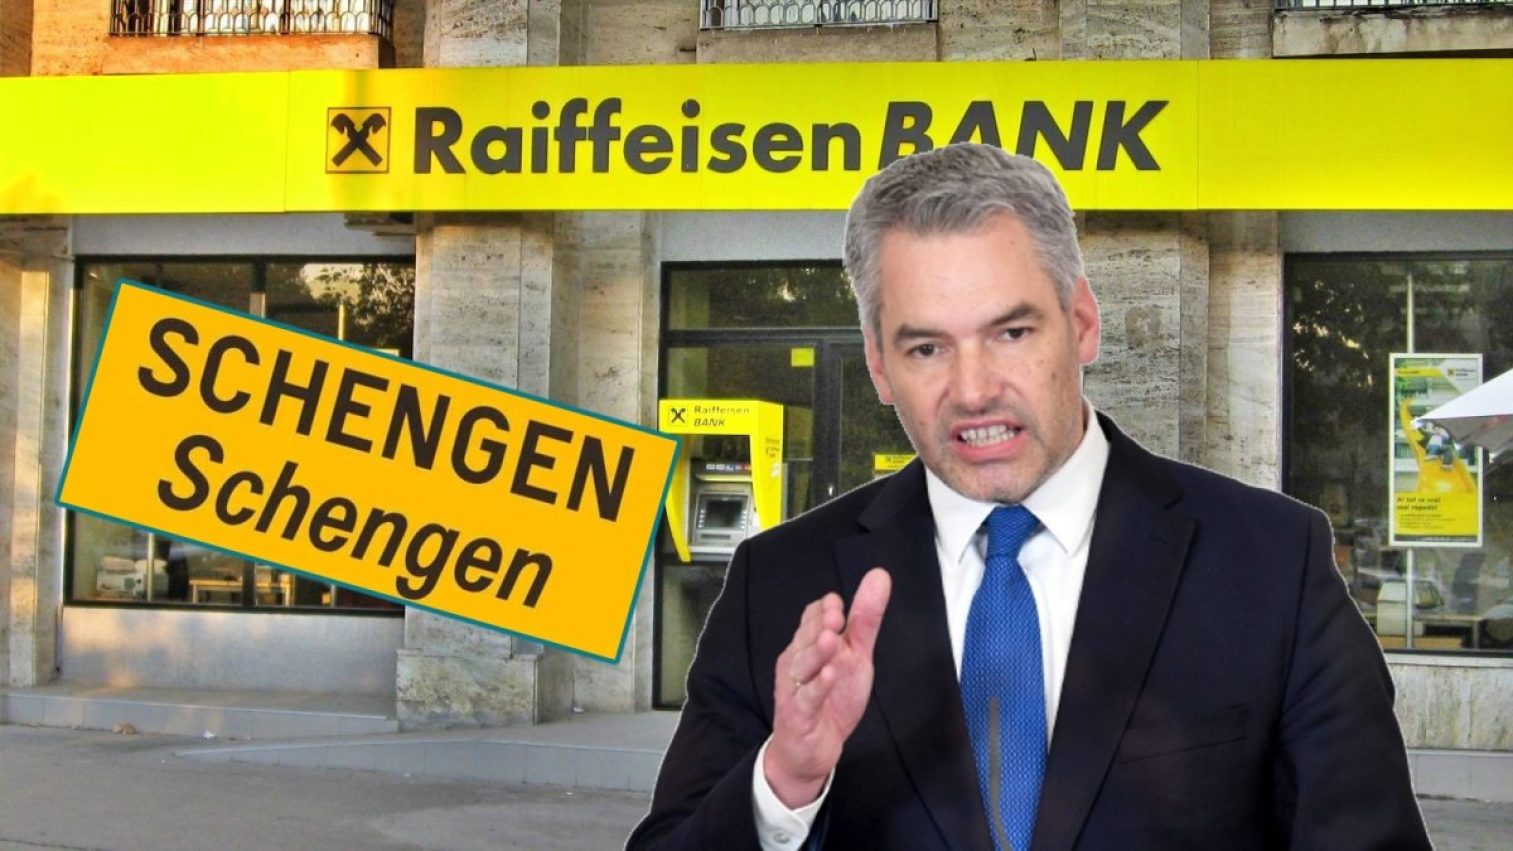 Raiffeisen Bank